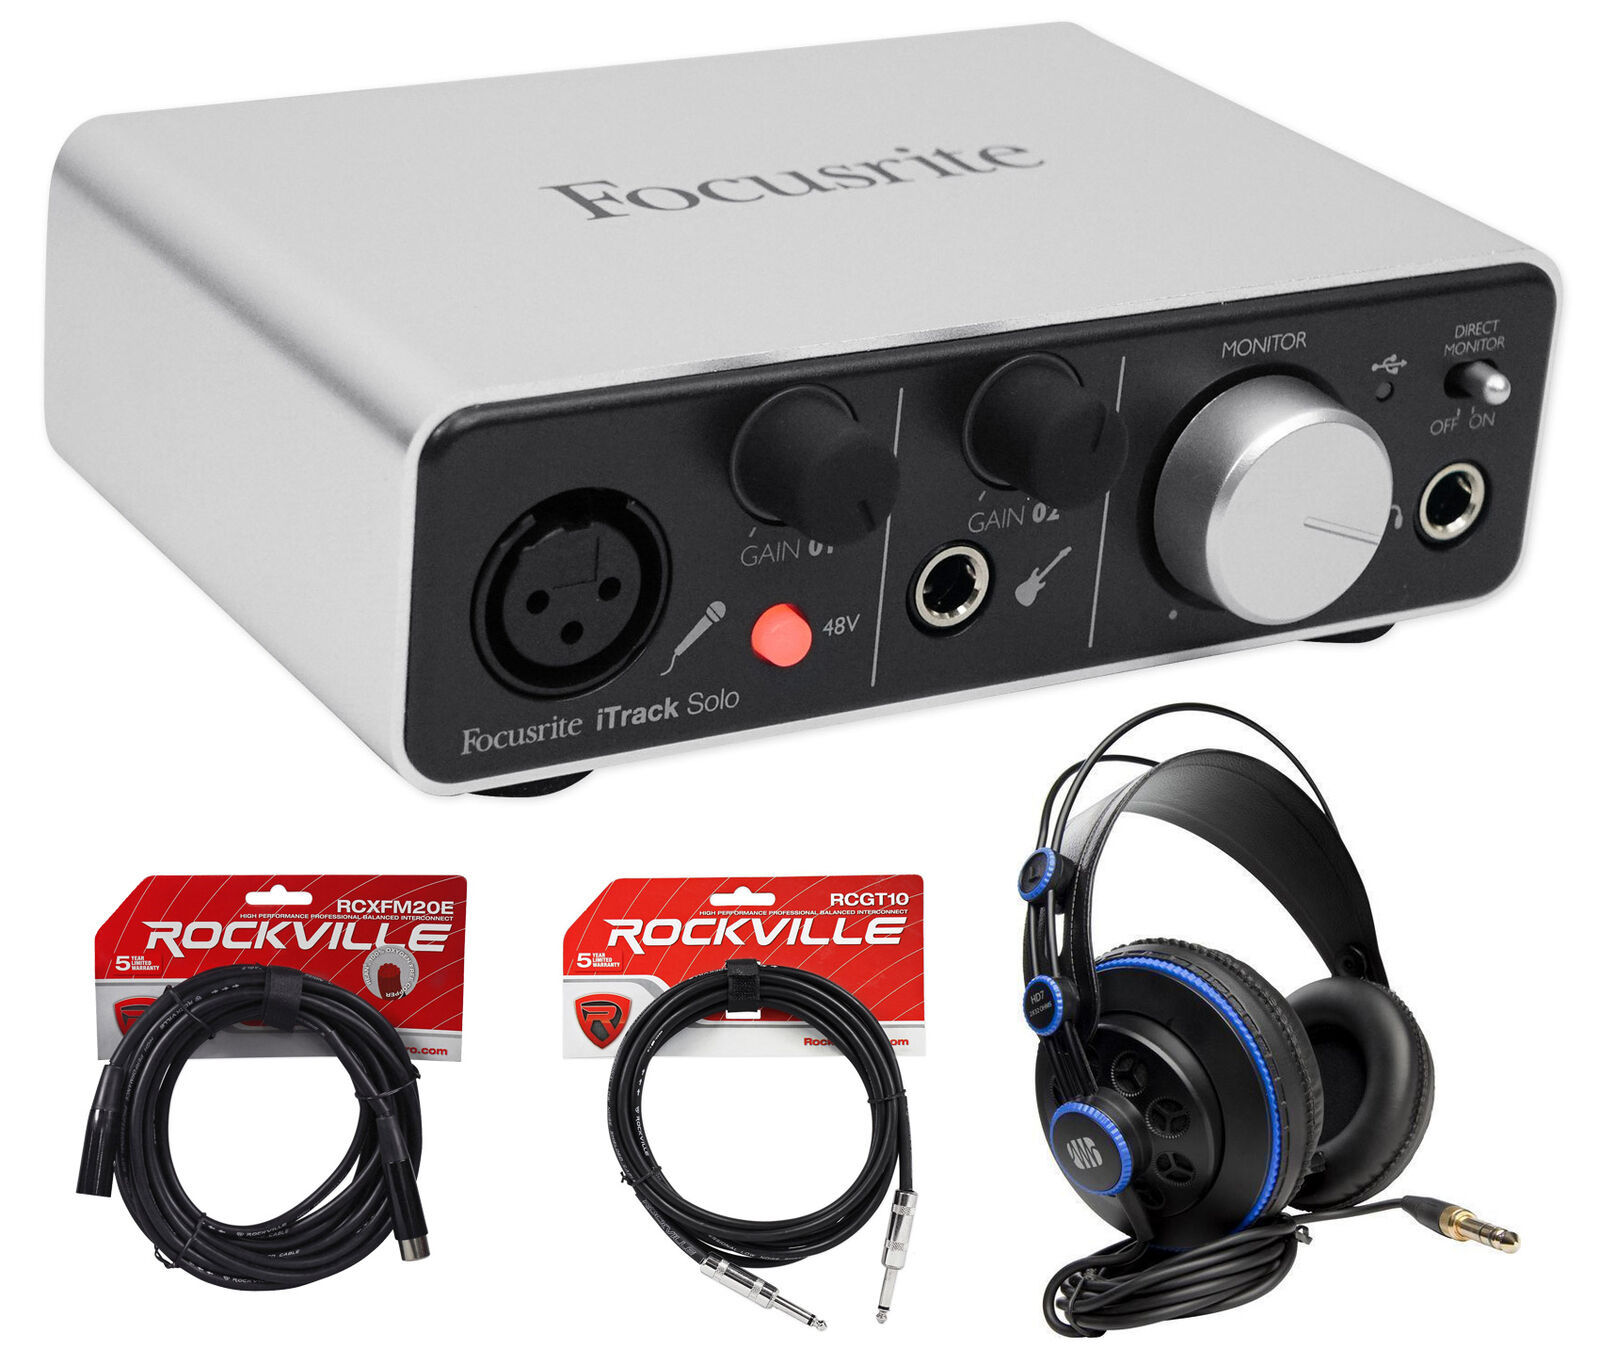 Focusrite ITRACK SOLO LIGHTNING USB Audio Recording Interface+Headphones+Cables